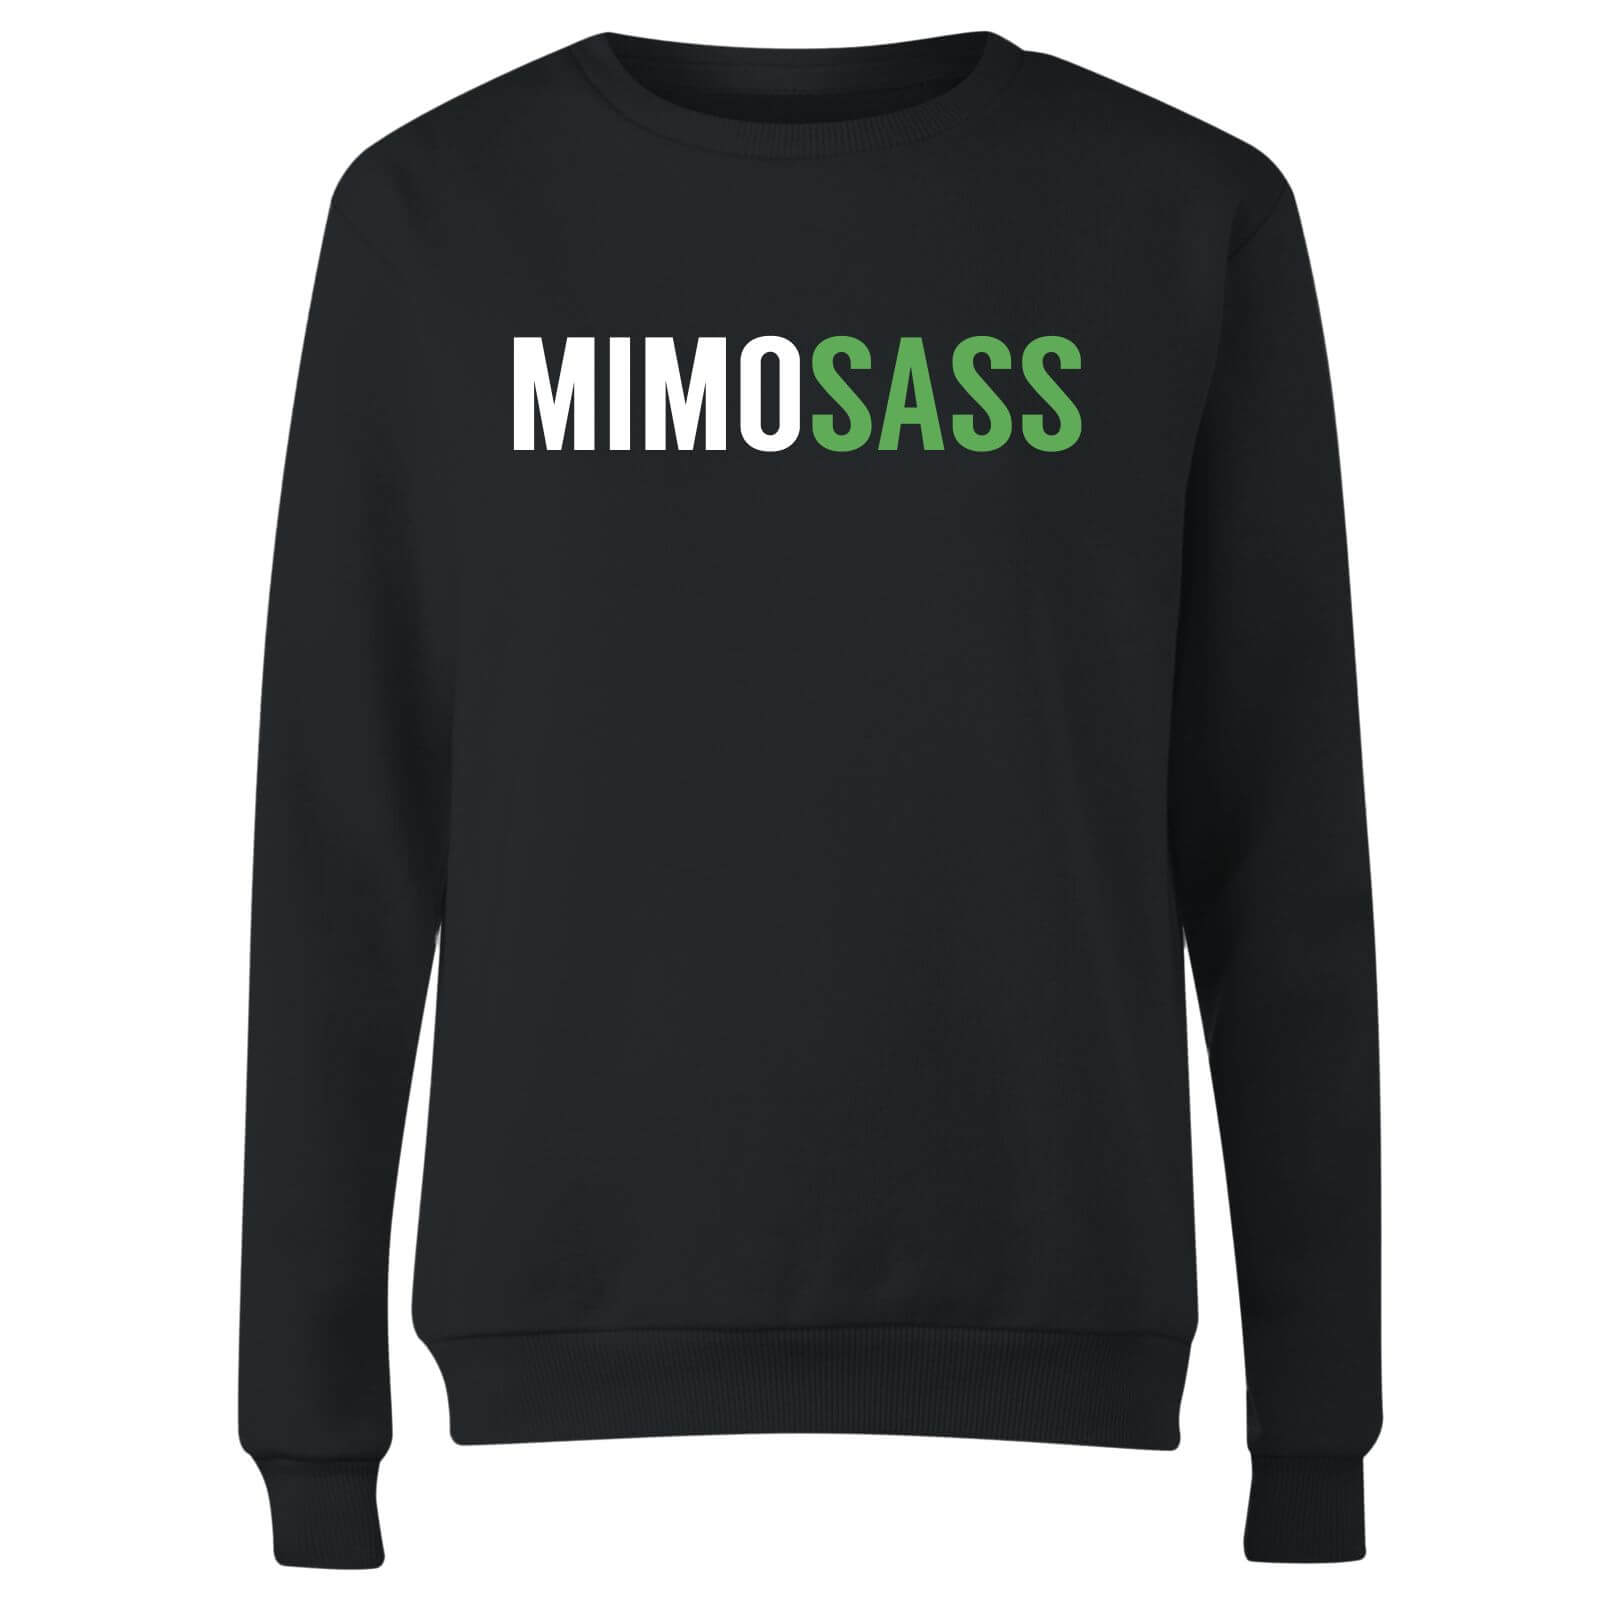 Mimsass Women's Sweatshirt - Black - 5XL - Black